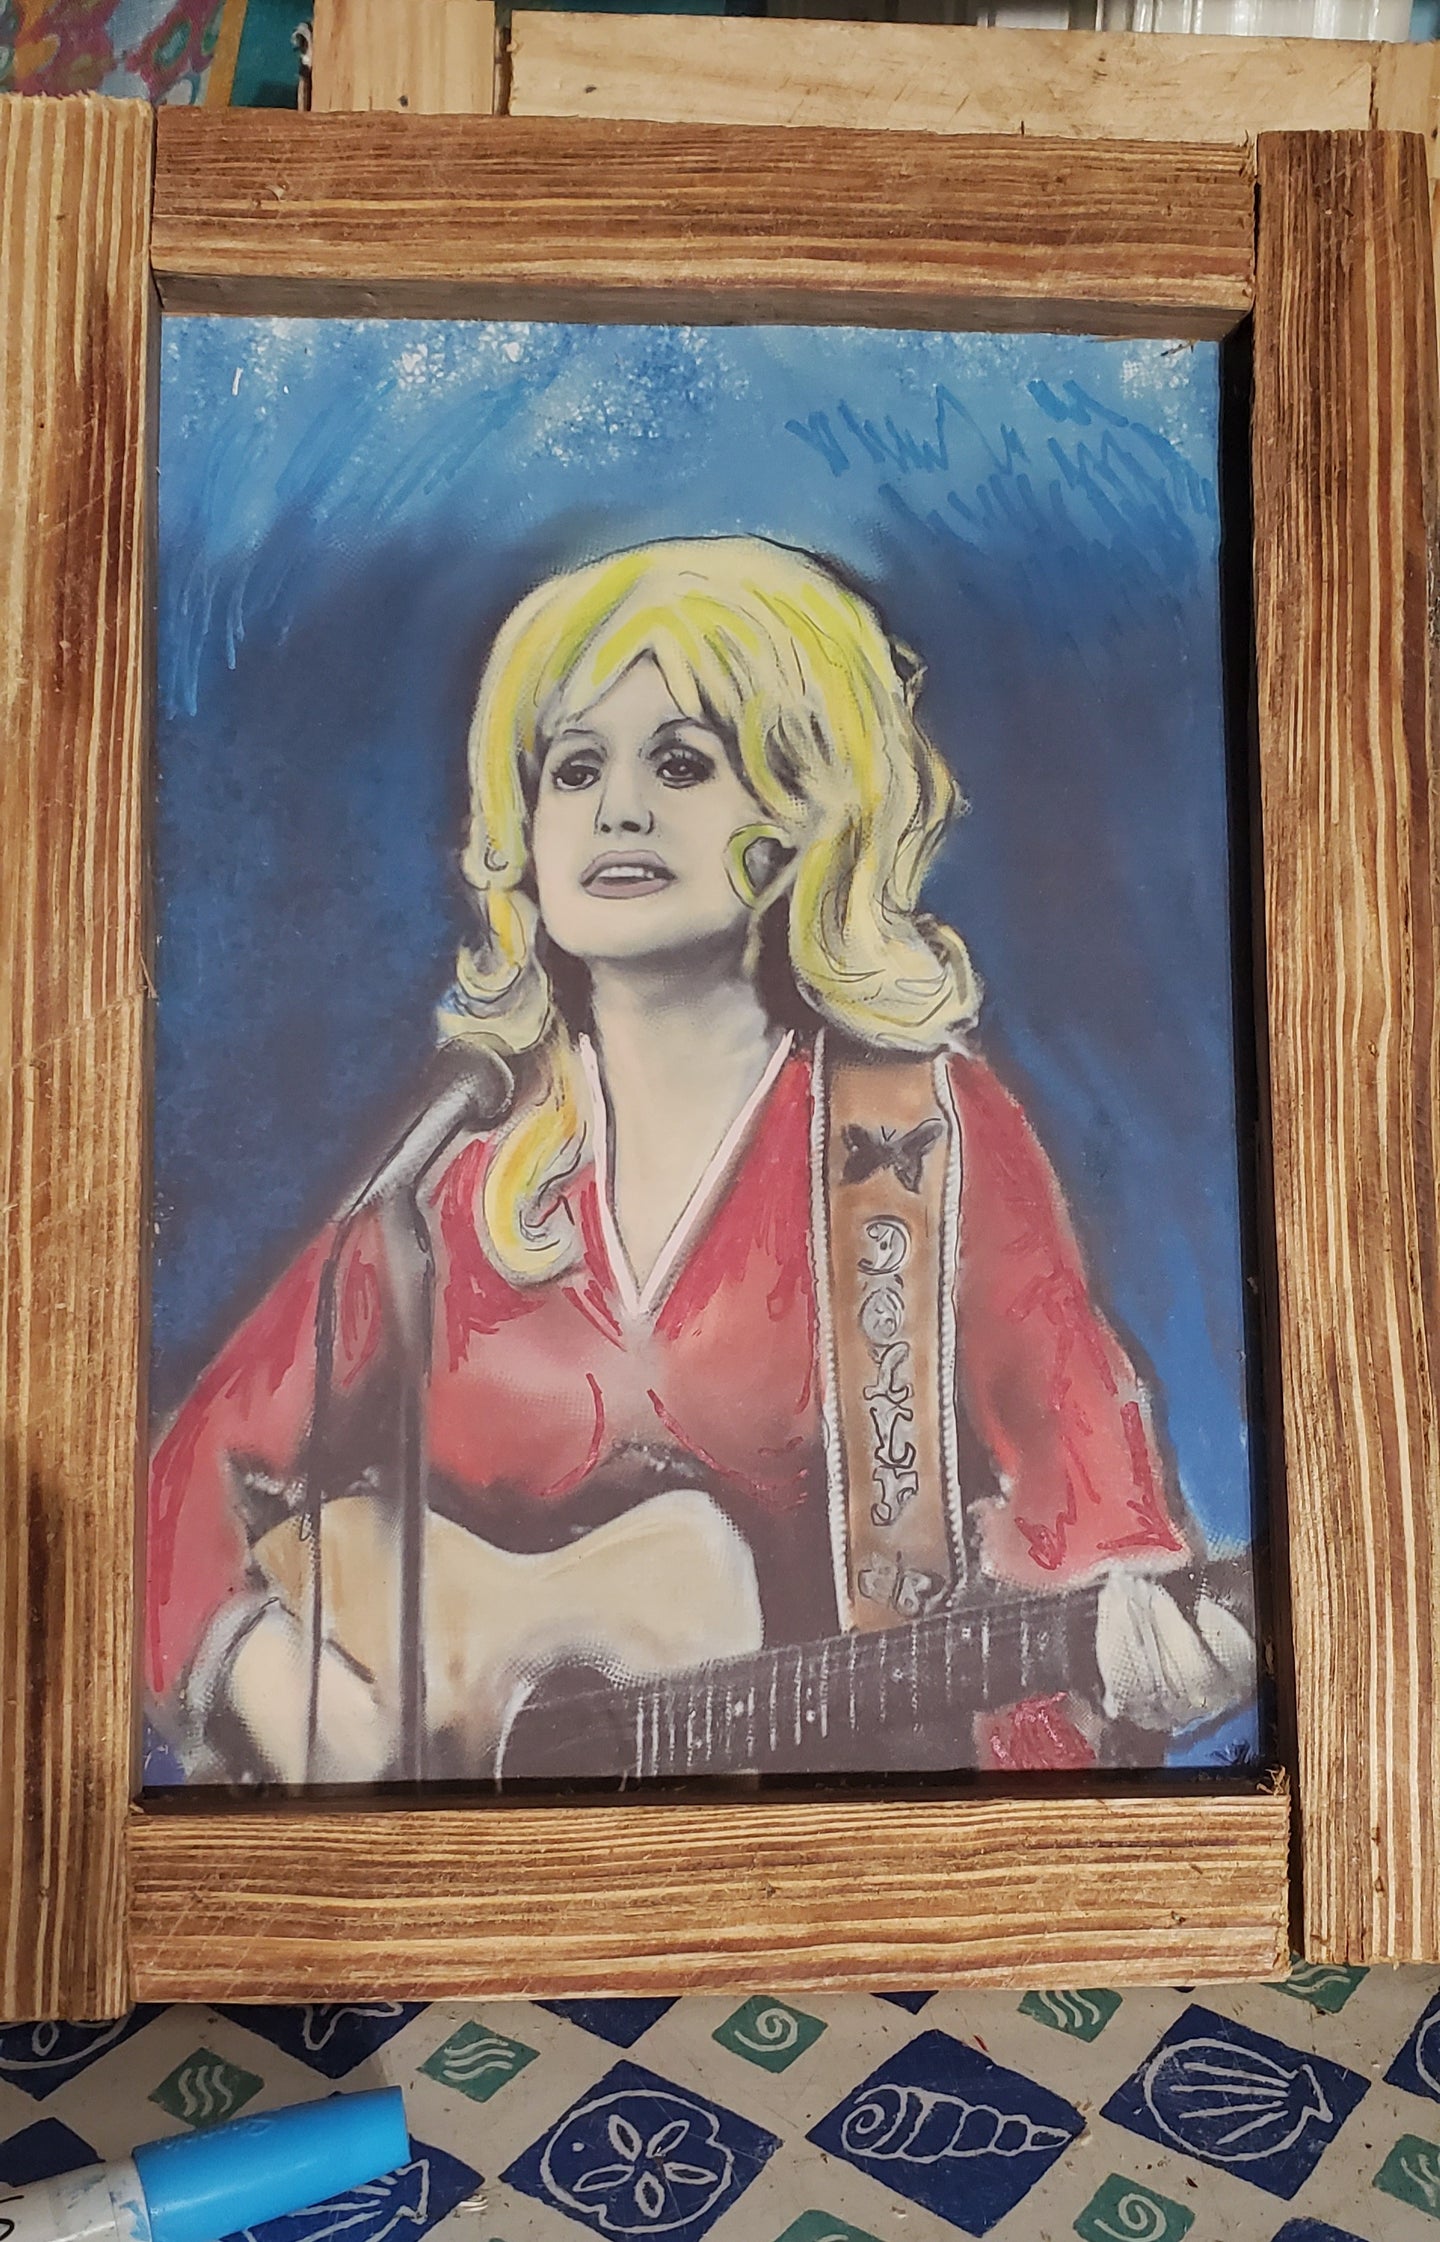 Dolly Parton framed print